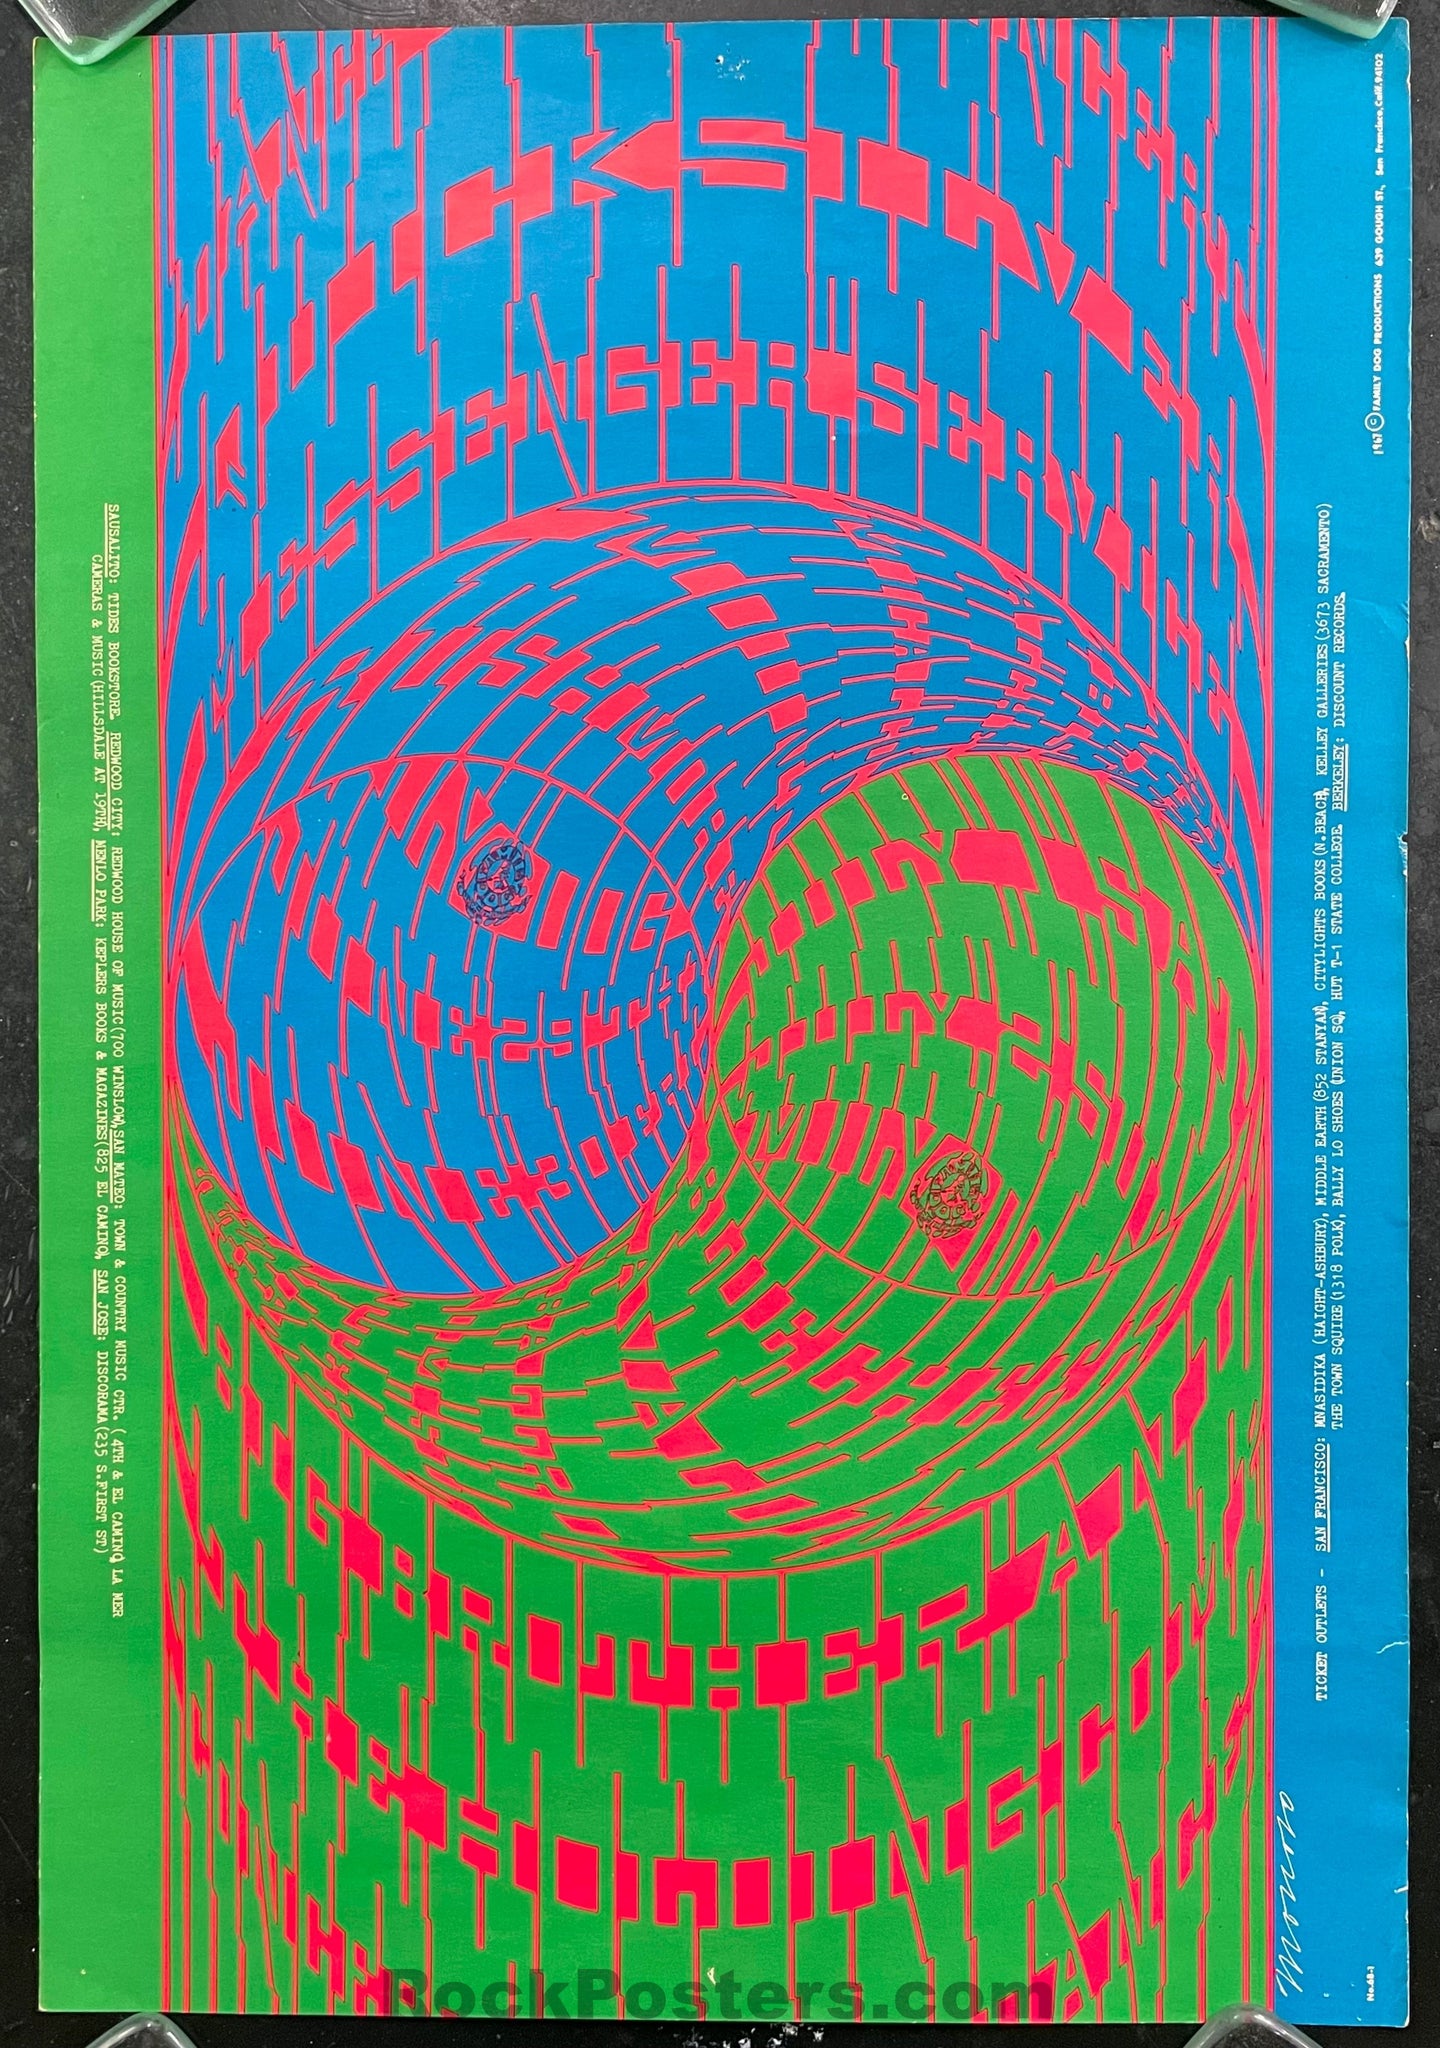 AUCTION - FD-68 - Quicksilver Messenger - 1967 Poster - Avalon Ballroom - Very Good